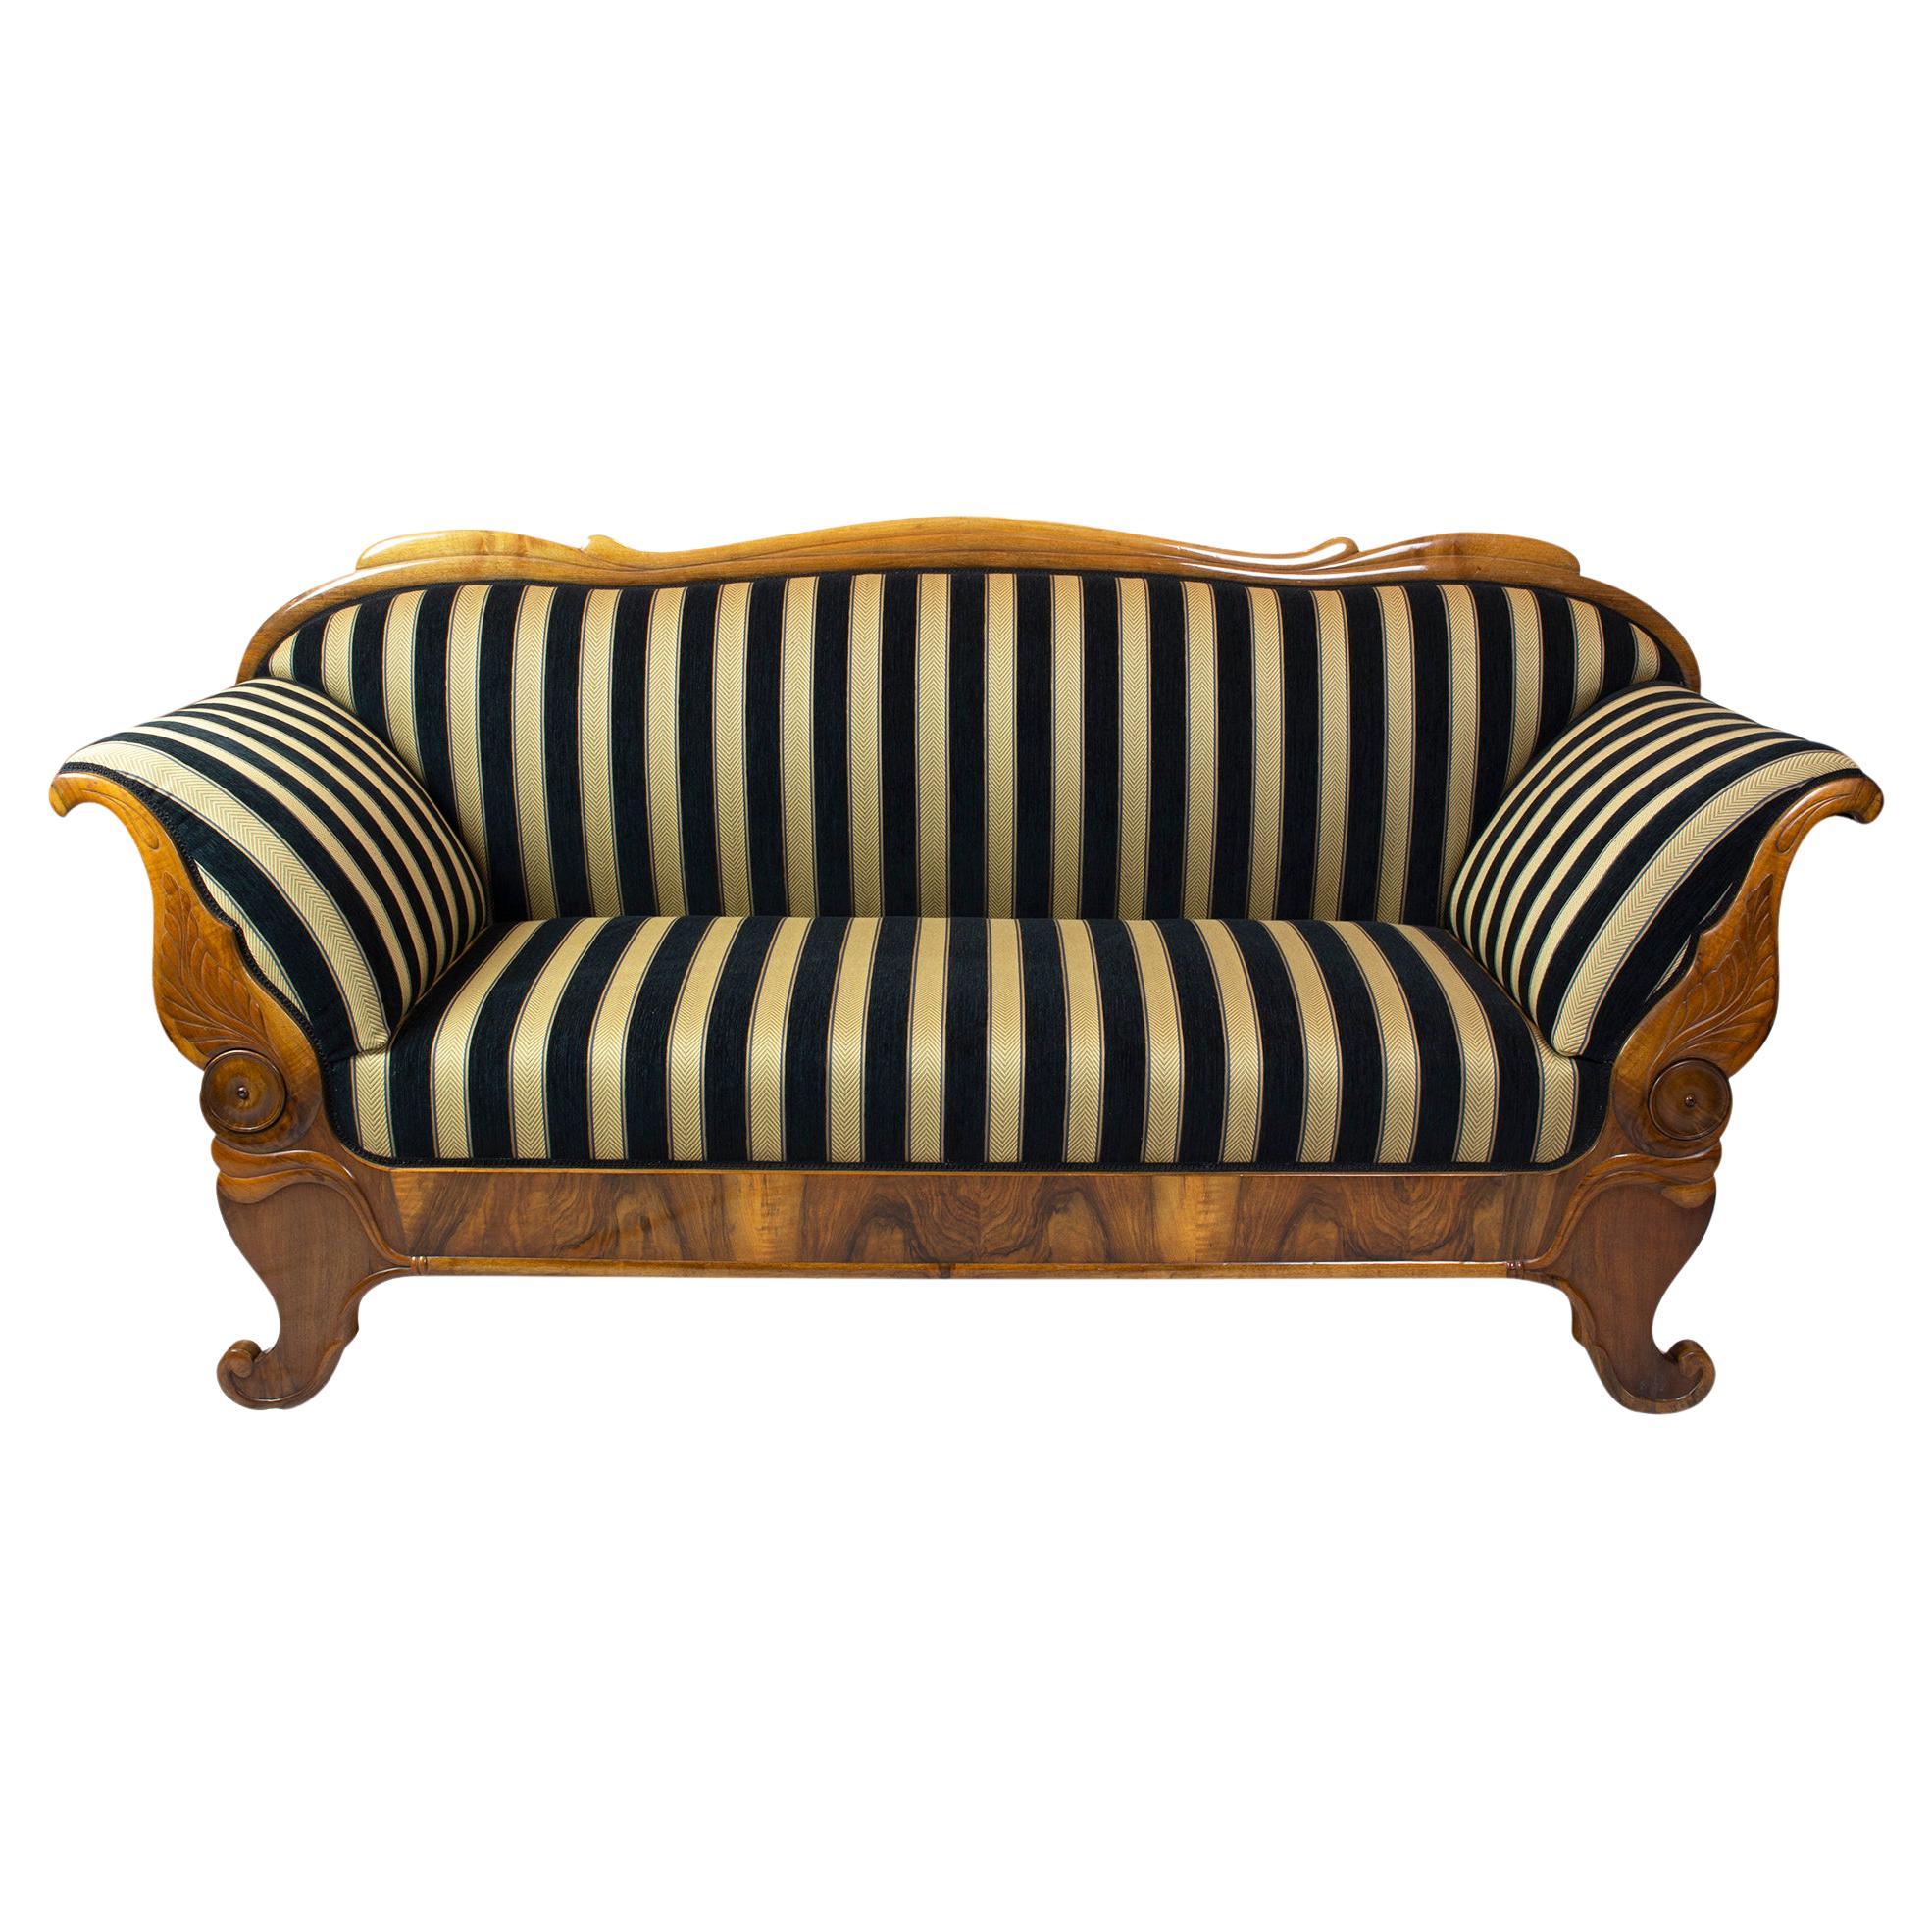 Early 19th Century Biedermeier Walnut Sofa from Germany